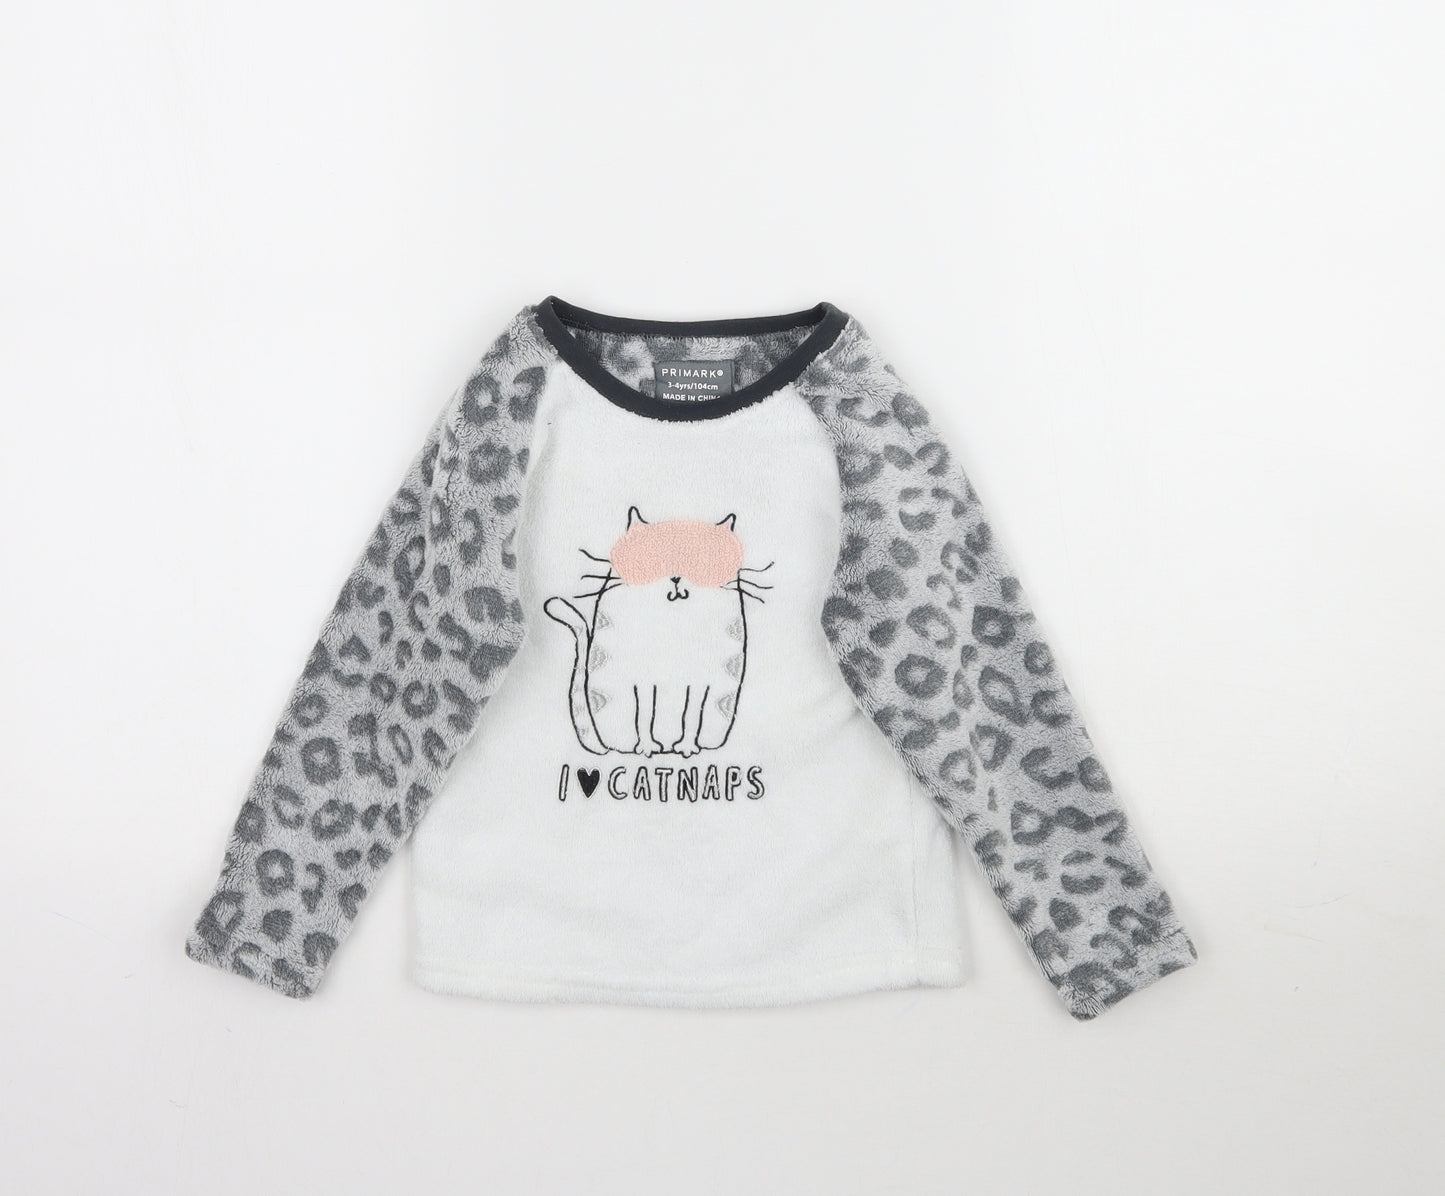 Primark Girls Multicoloured Animal Print  Top Pyjama Top Size 3-4 Years  - Fluffy Cat